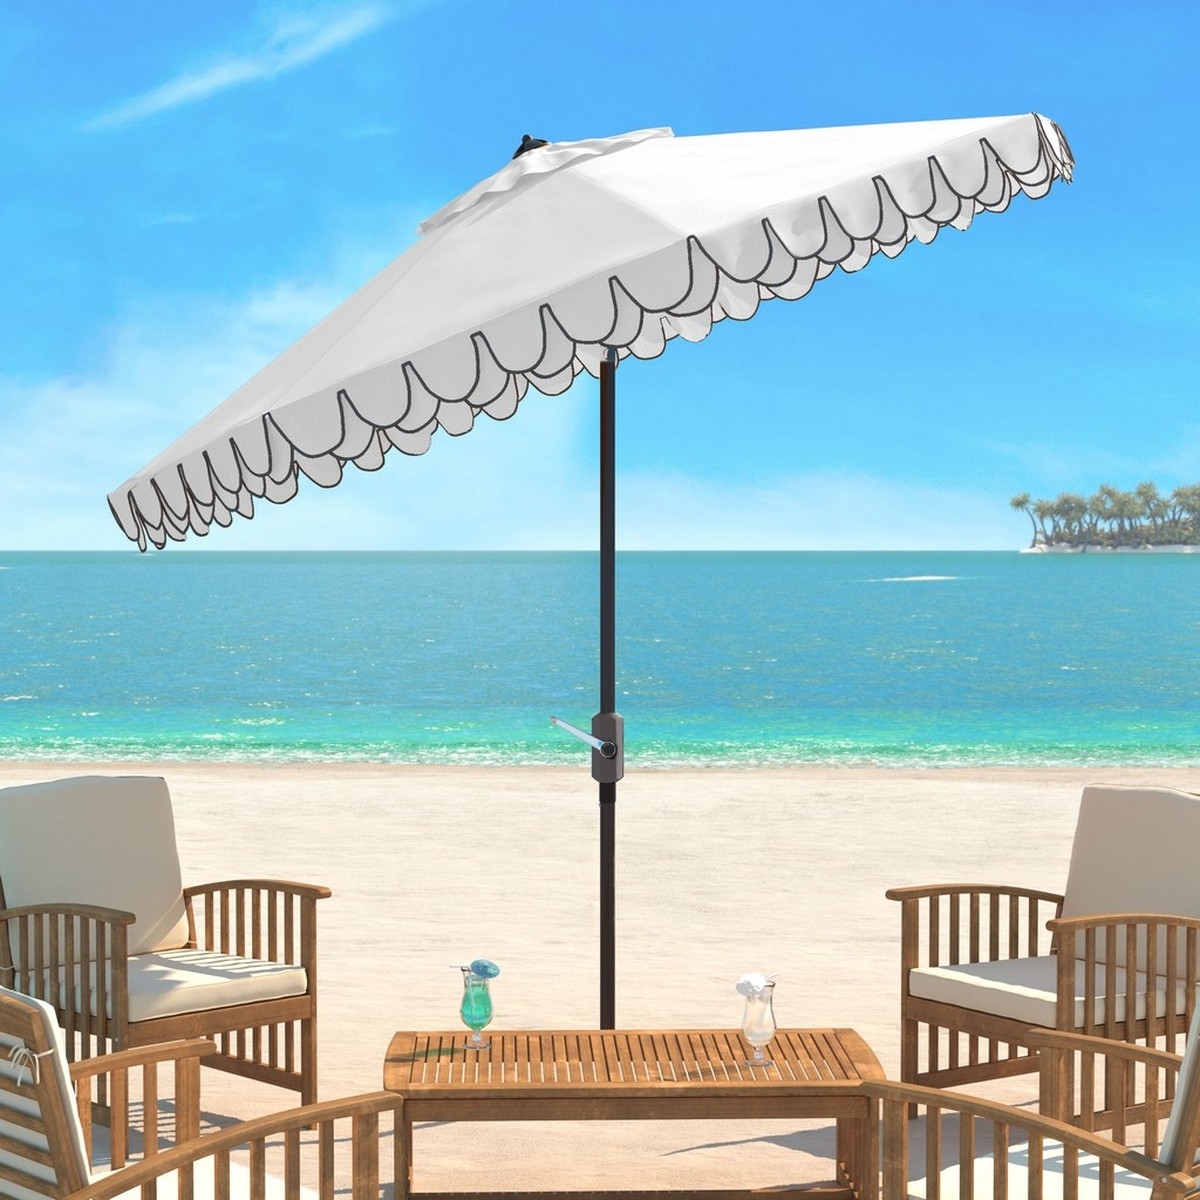 Uv Resistant Elegant Valance 9Ft Auto Tilt Umbrella - Beige/White - Arlo Home - Image 4